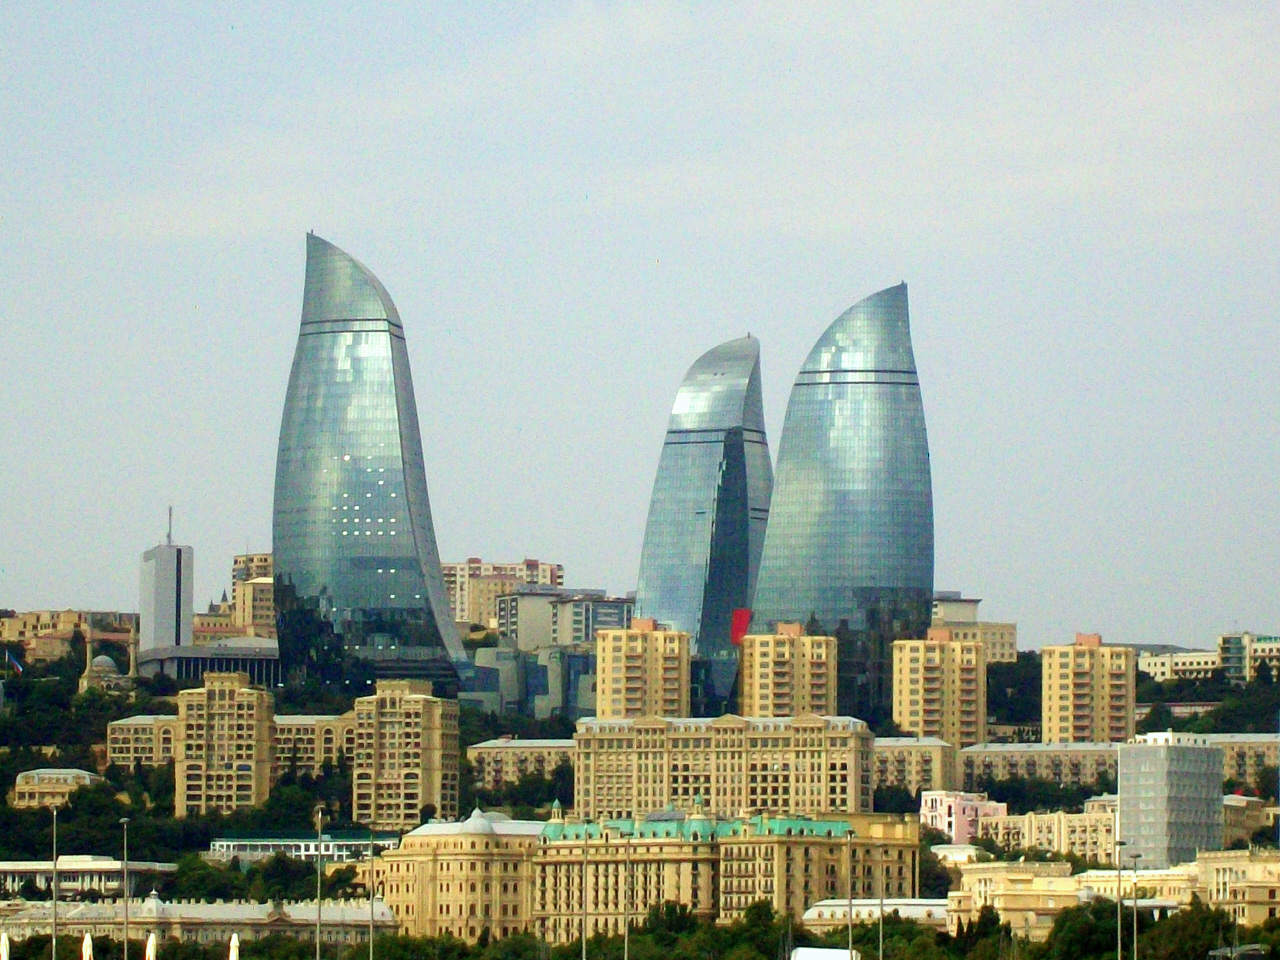 Azerbaijan has Some Remarkable Contemporaty Architecture - The Flame Towers - Baku, Azerbaijan